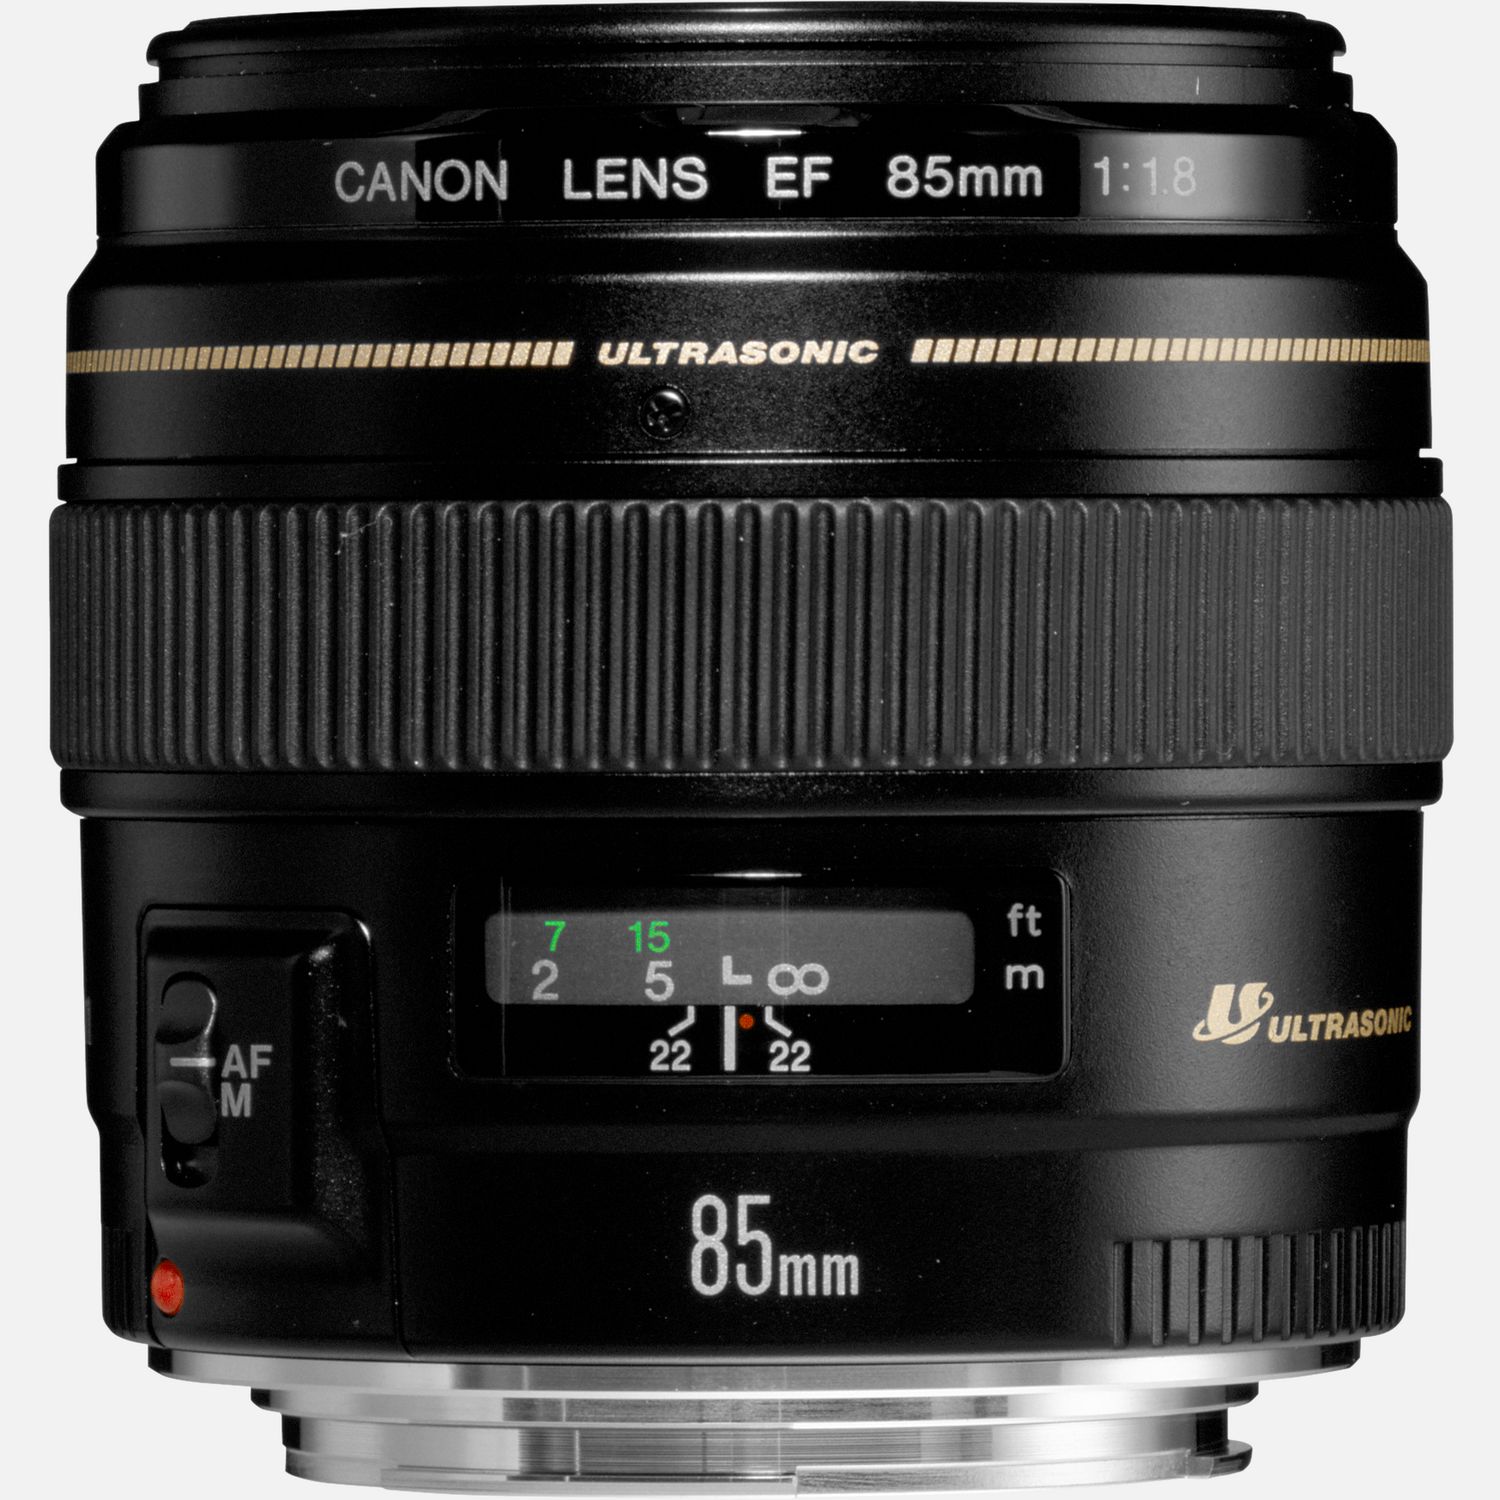 EF Canon 85mm f1.8